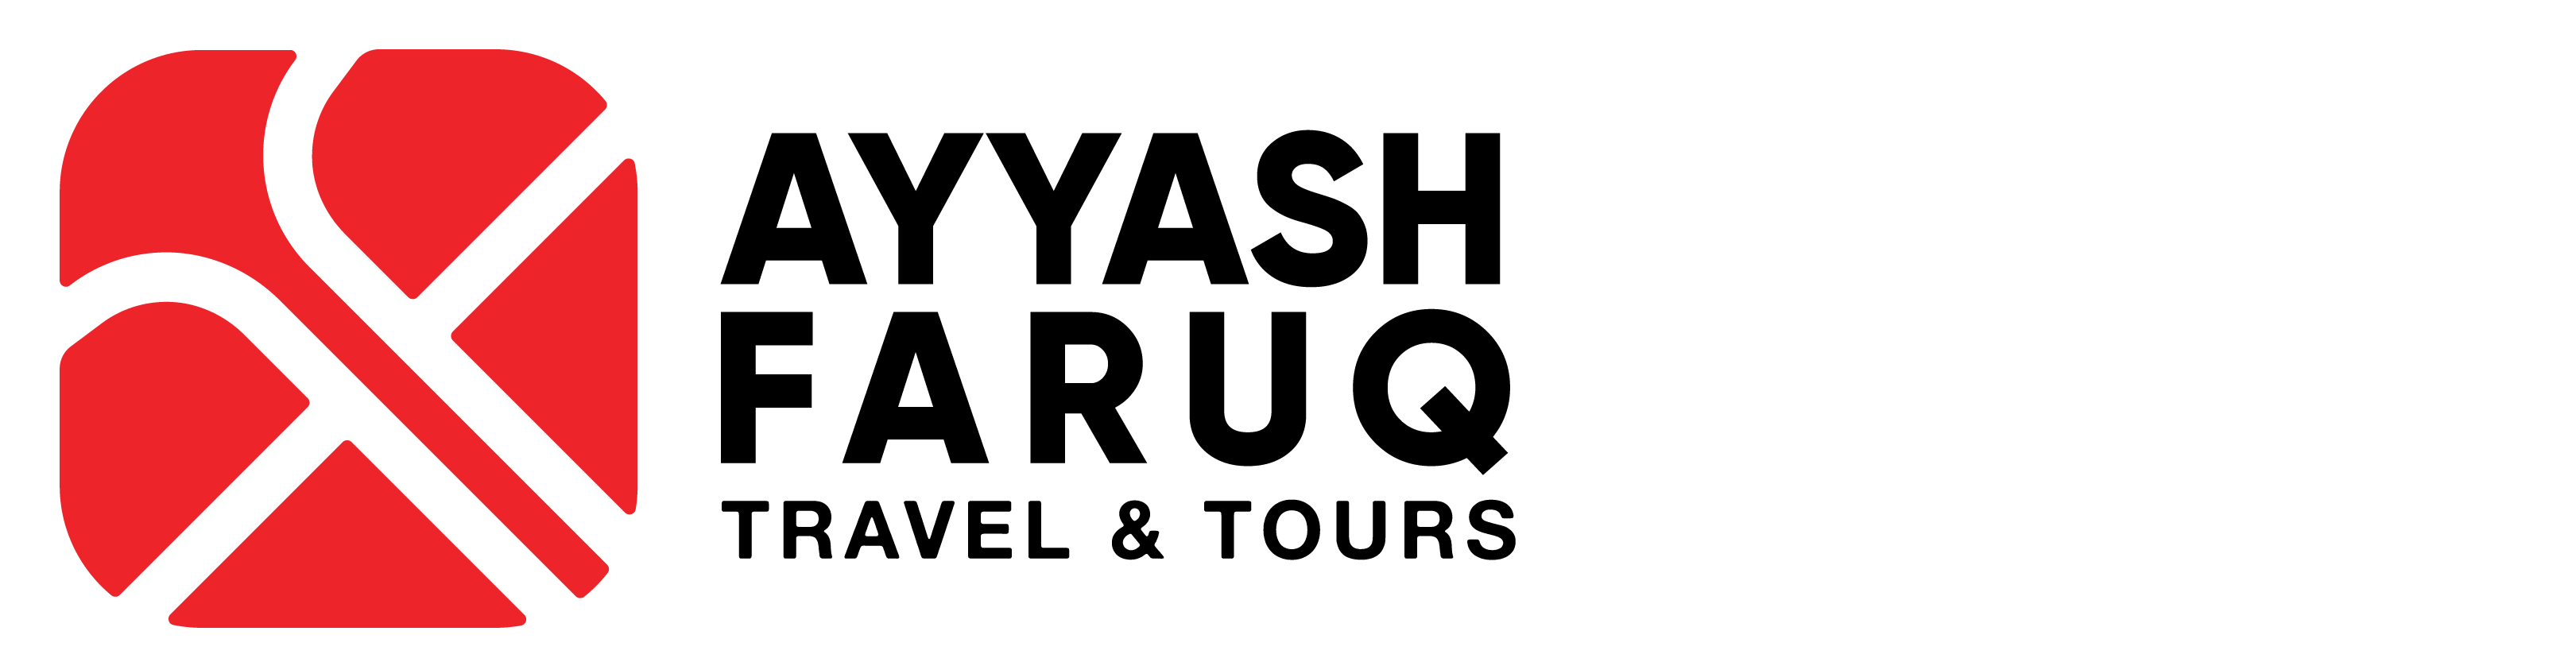 Ayyash Faruq Travel & Tours